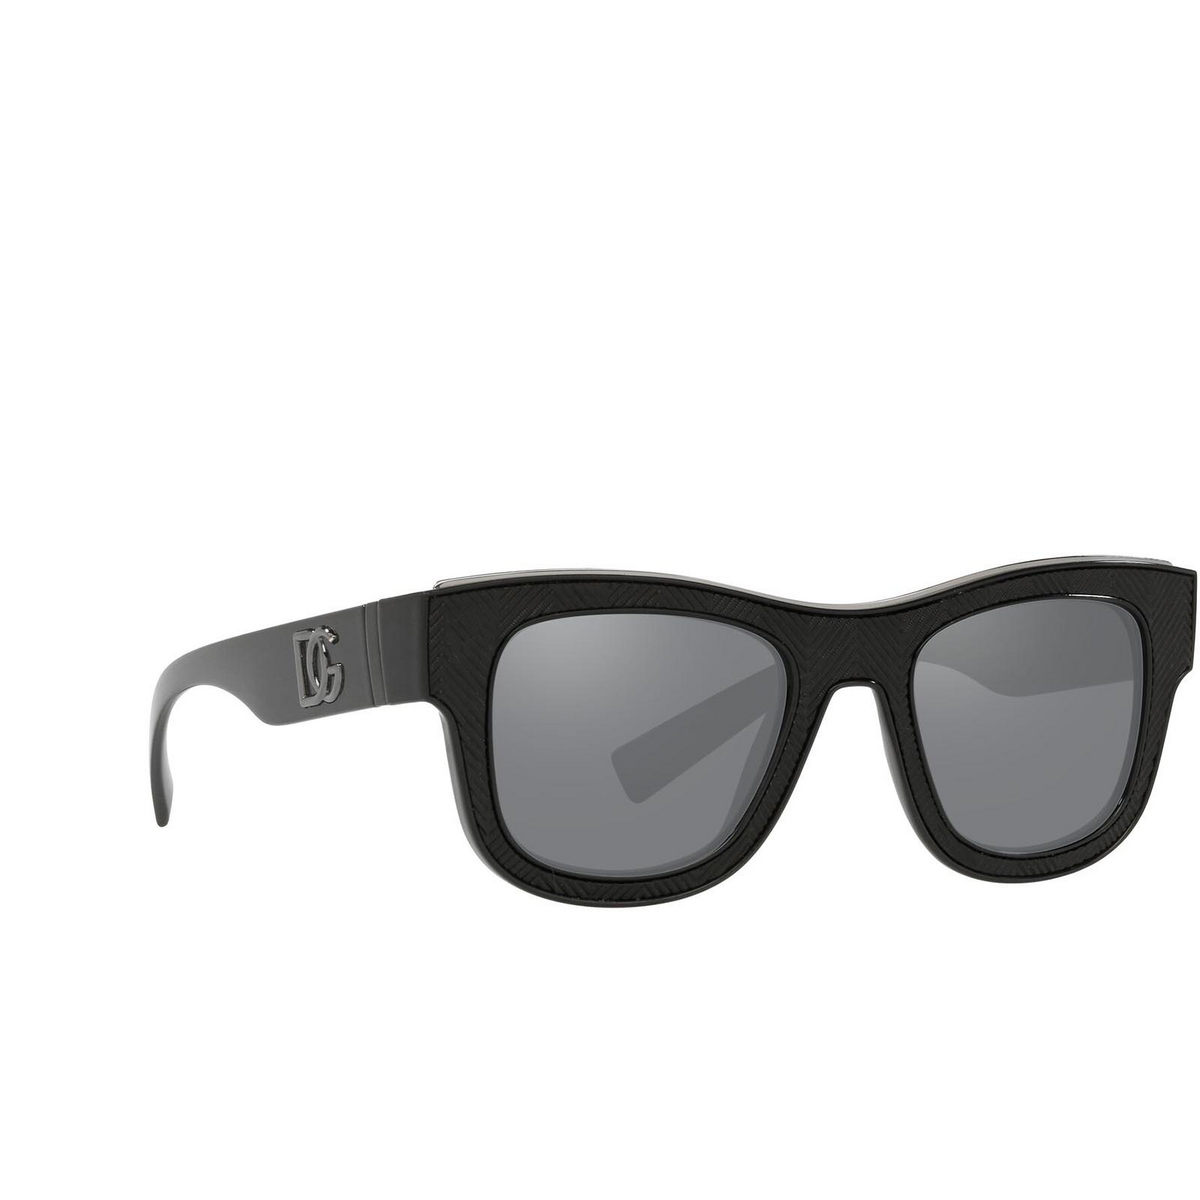 Dolce & Gabbana® Square Sunglasses: DG6140 color Black 501/6G - three-quarters view.